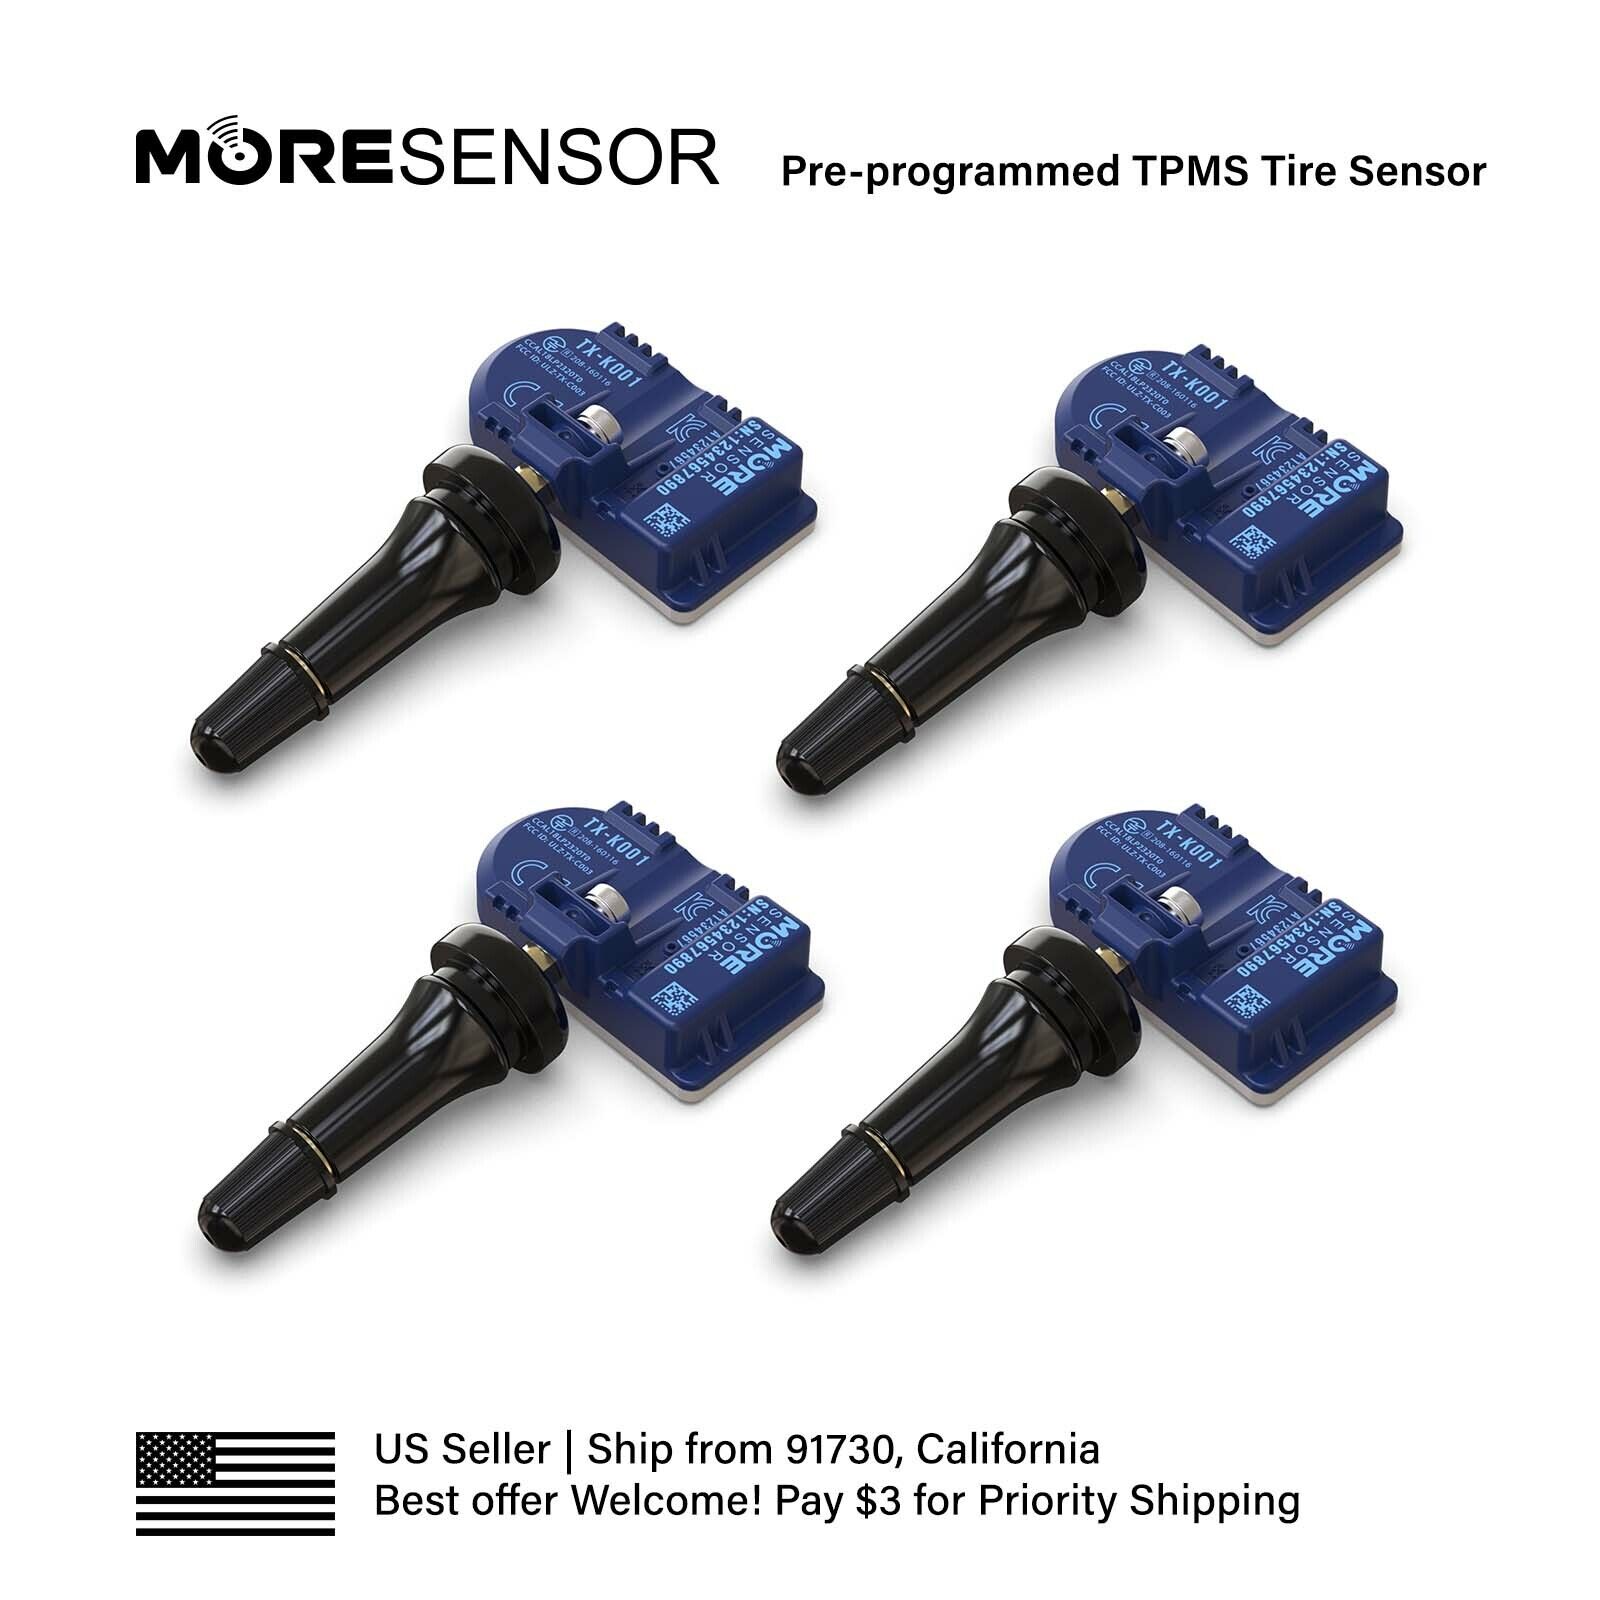 4PC 433MHz MORESENSOR TPMS Snap-in Tire Sensor for M3 M5 M6 X3 X5 X6 Z4 E83 E53